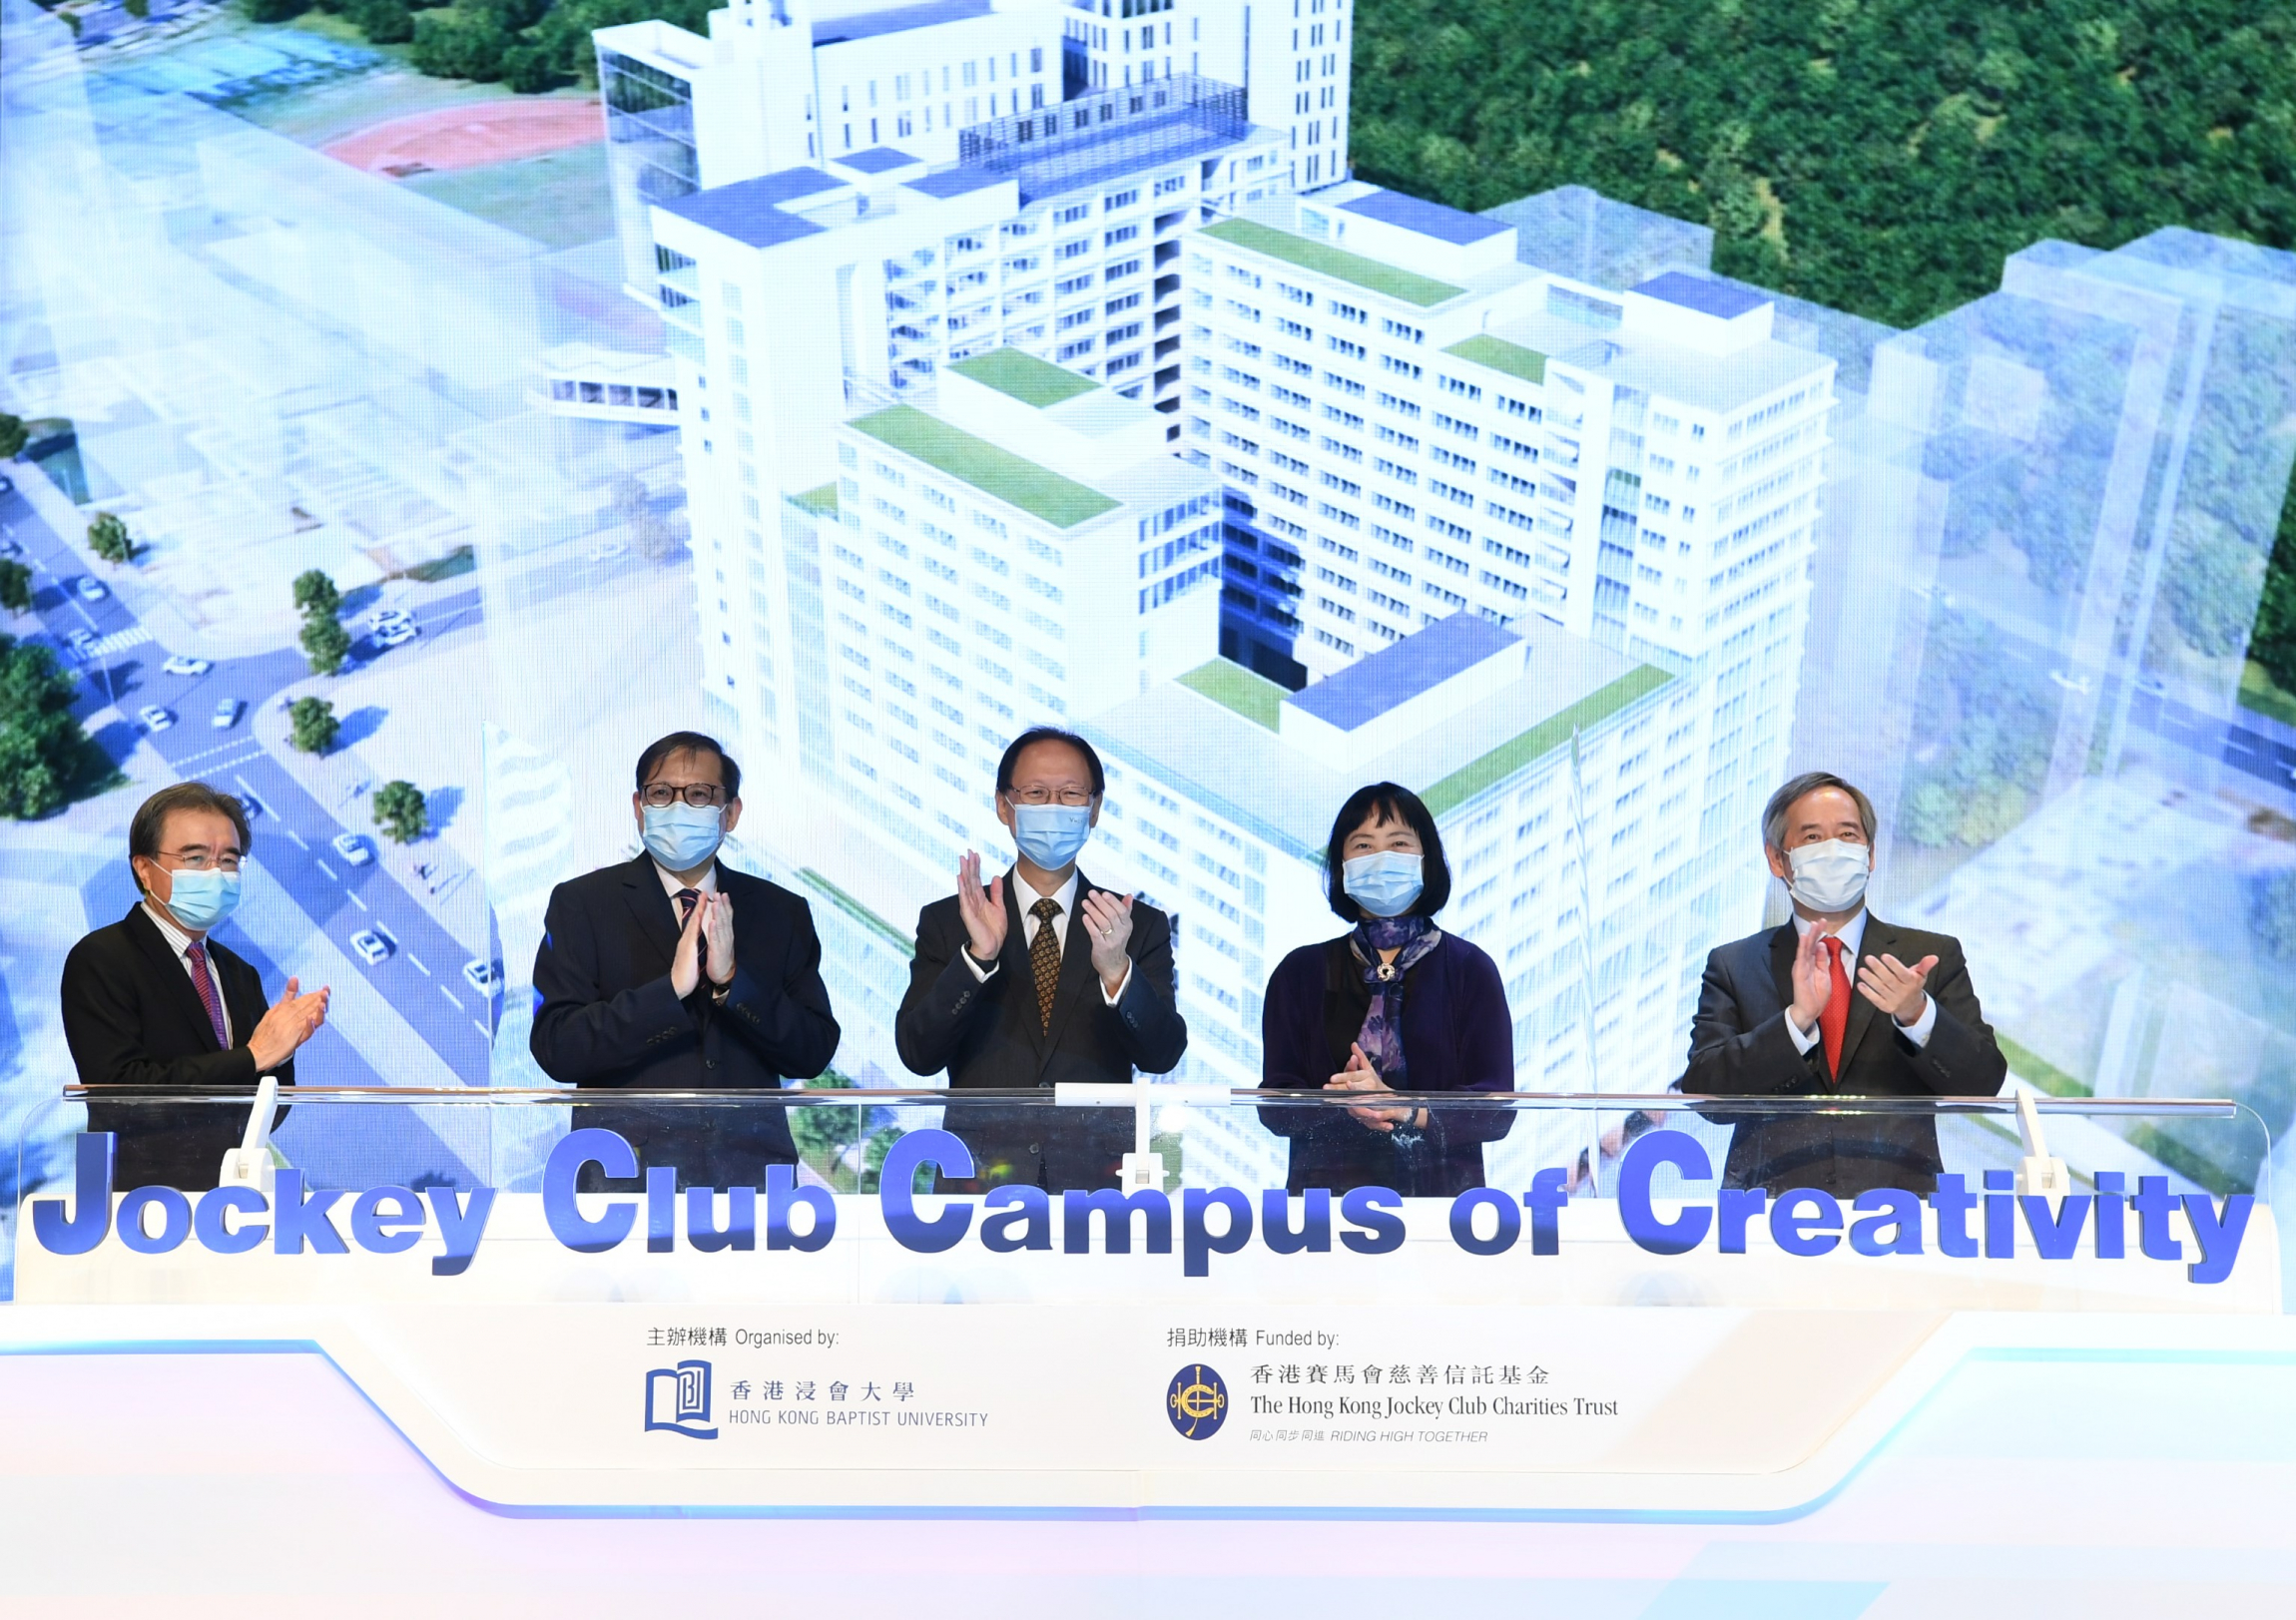 Jockey Club Campus of Creativity